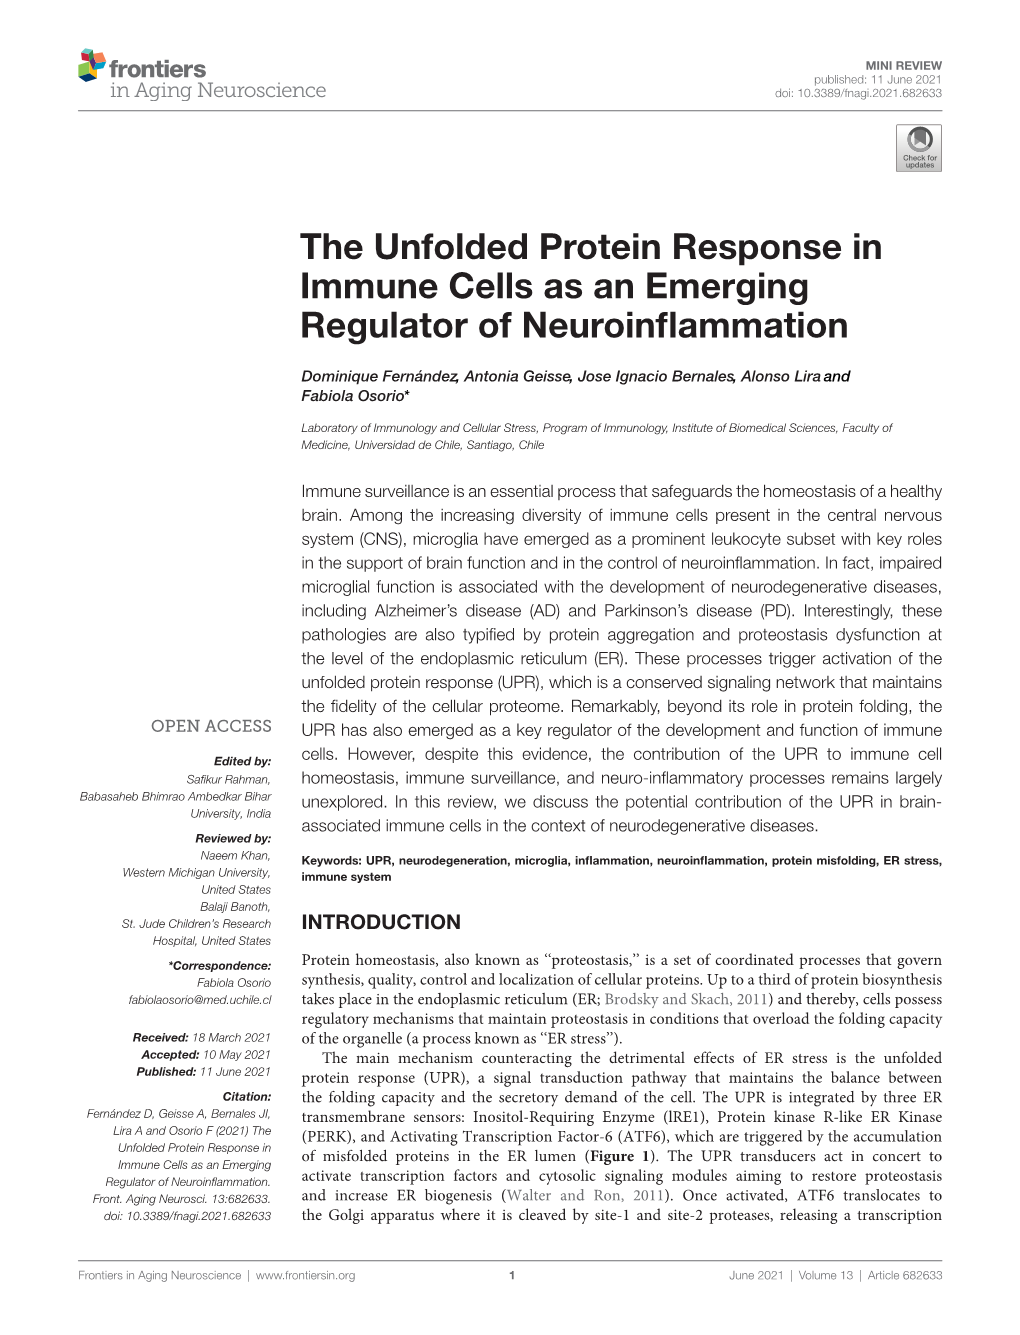 The Unfolded Protein Response in Immune Cells As an Emerging Regulator of Neuroinﬂammation